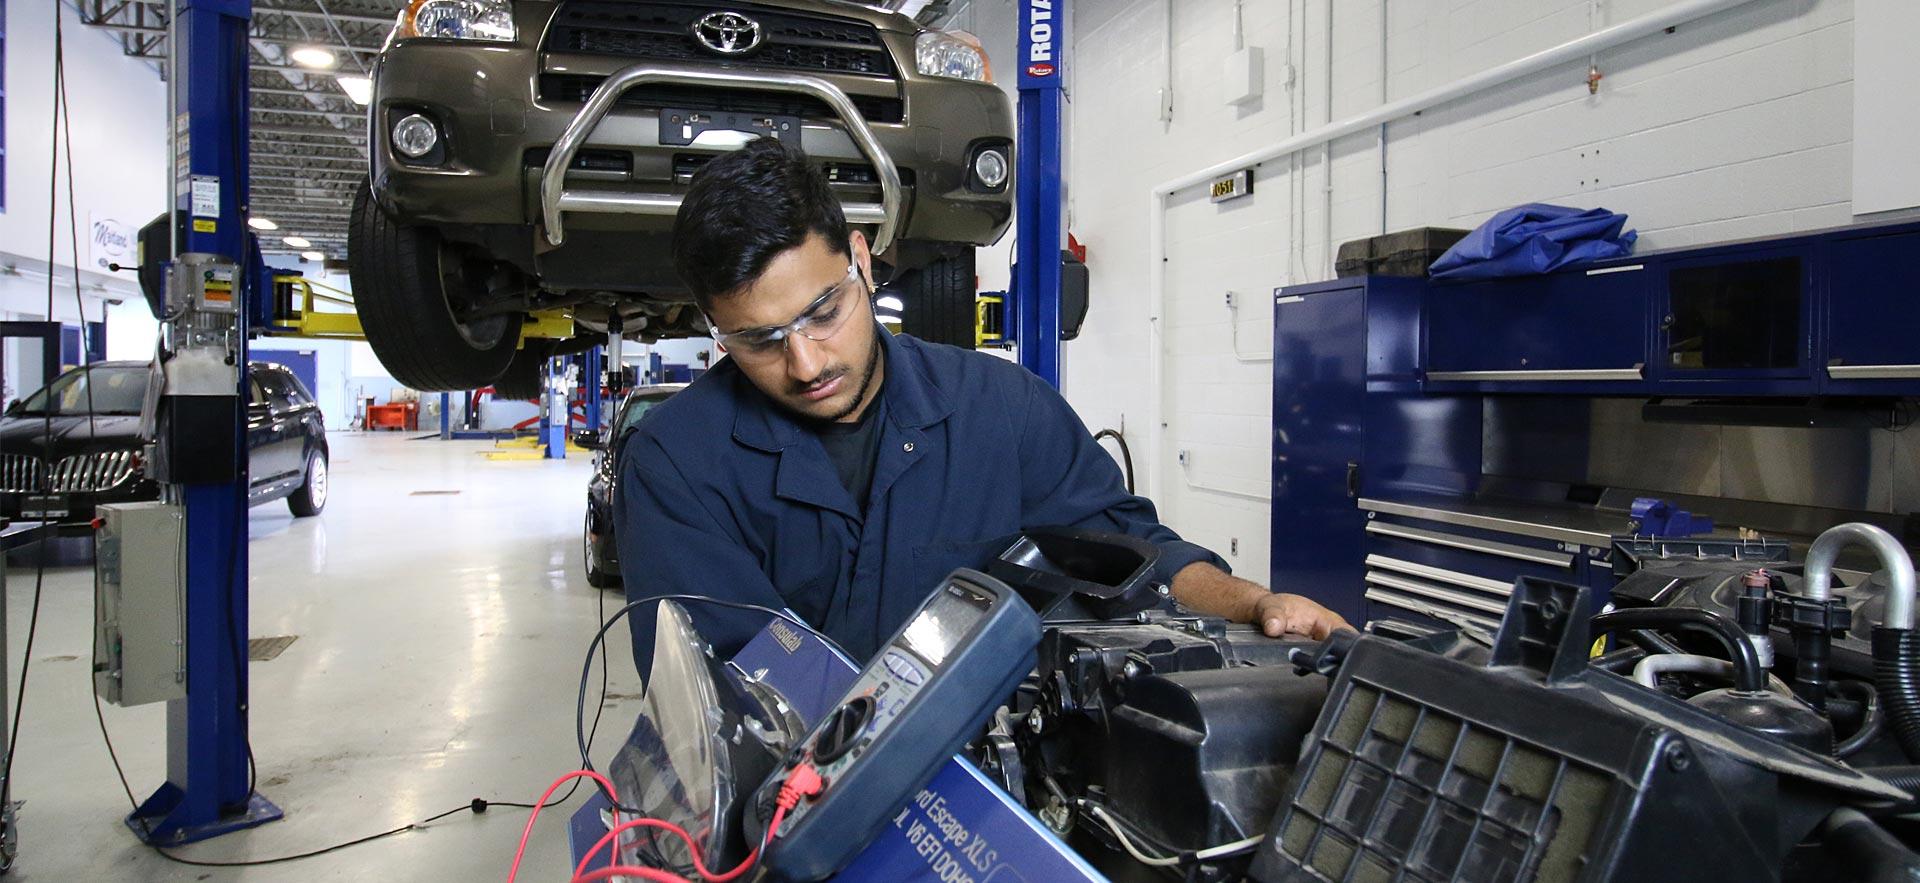 One male Motive Power Technician - Advanced Repair student runs diagnostics on a car engine.